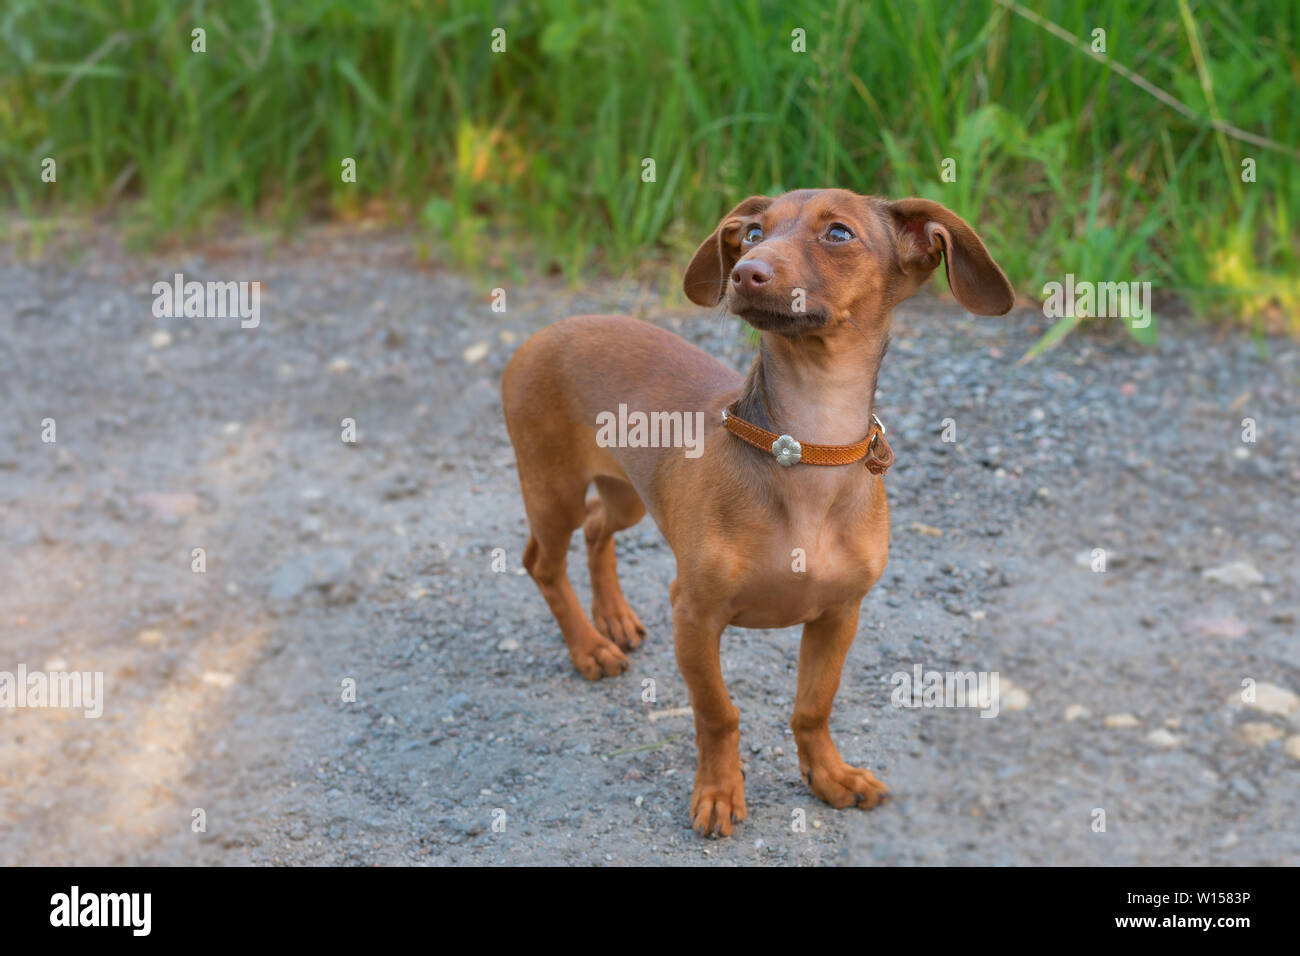 A beautiful dachshund puppy dog with sad eyes dog portrait Stock Photo